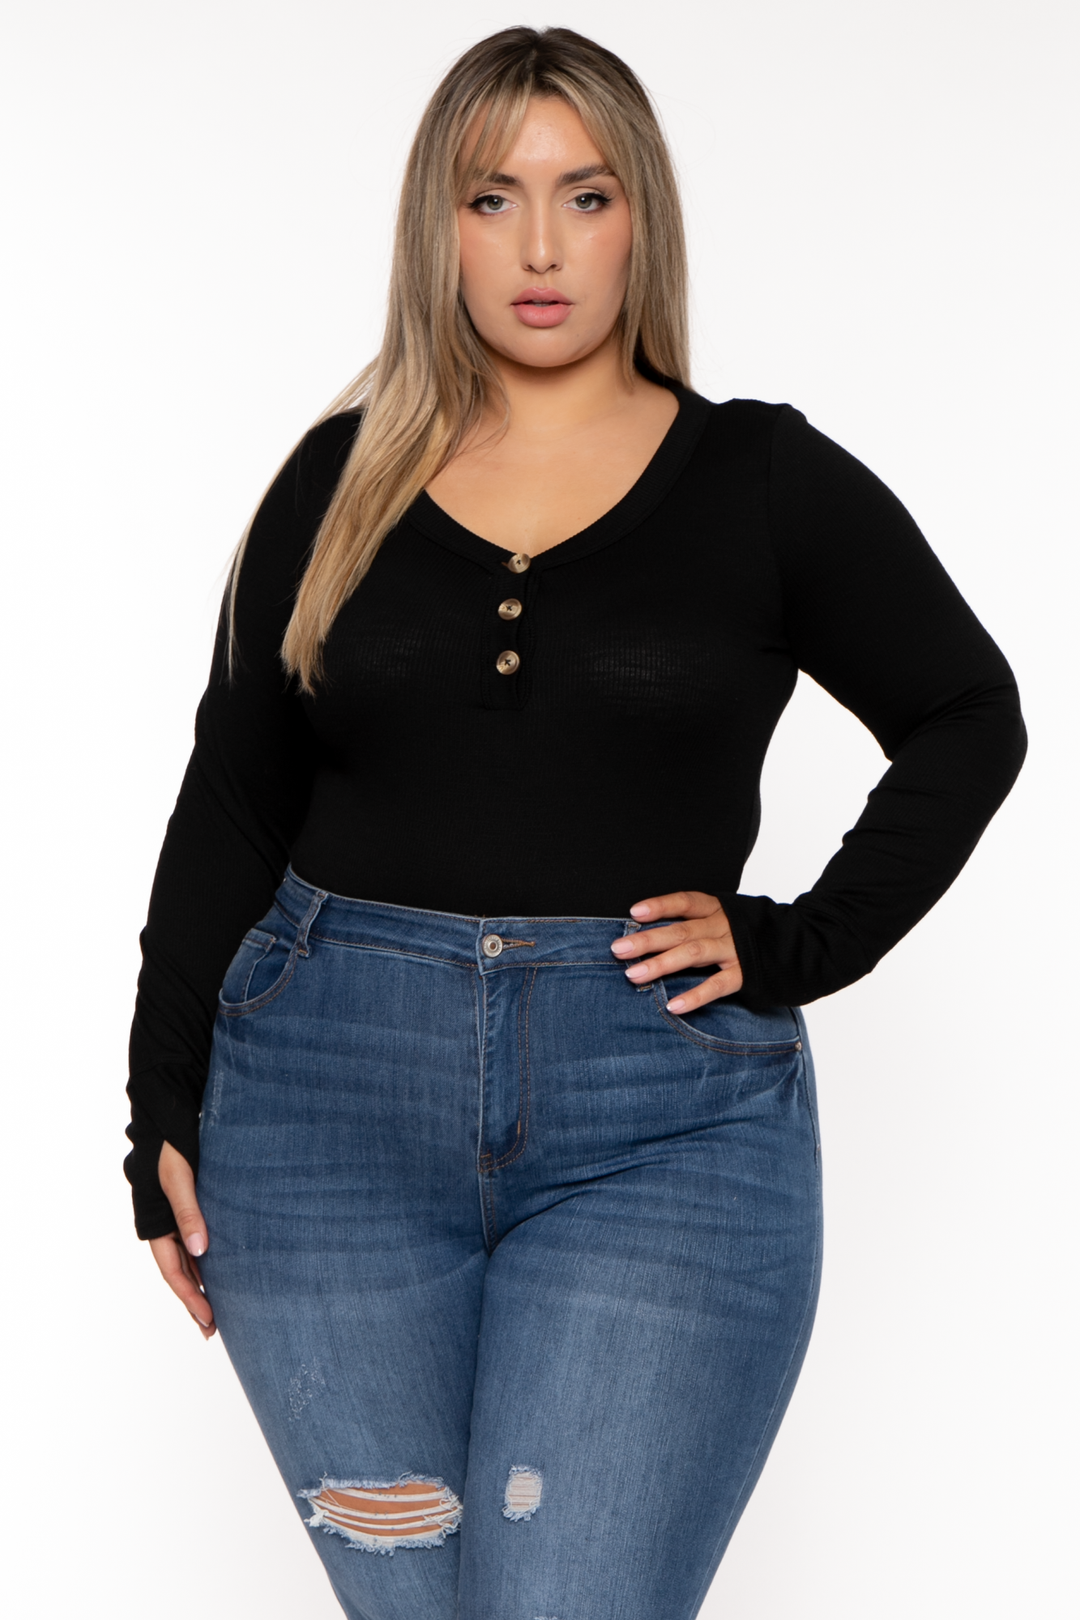 Curvy Couture, Tops, New Curvy Sense Plus Size Beth Keyhole Knit Bodysuit  Black 3x